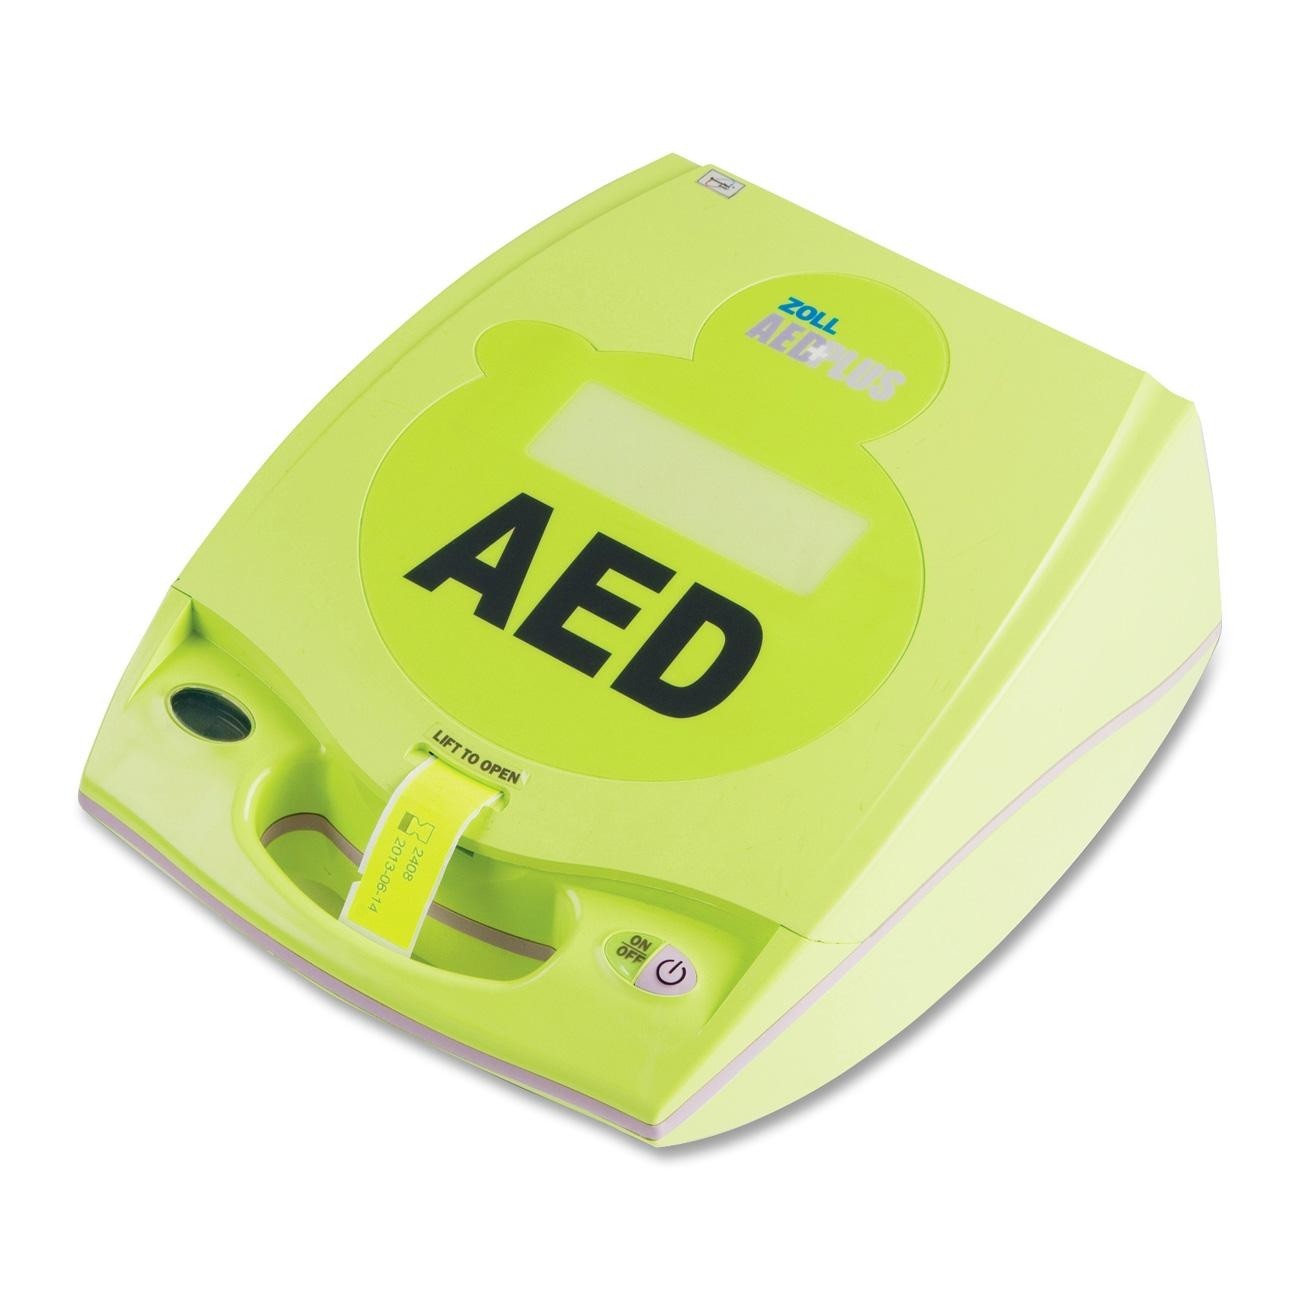 Best Defibrillators For Offices 2020